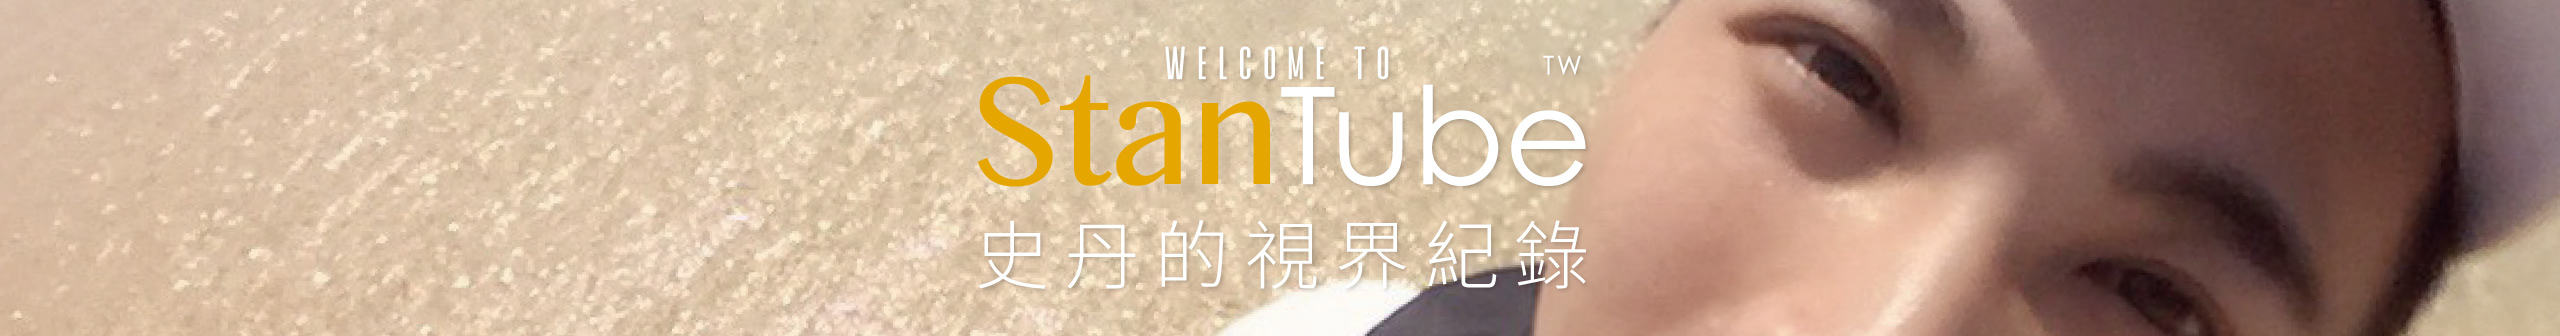 Stan Huang profil başlığı